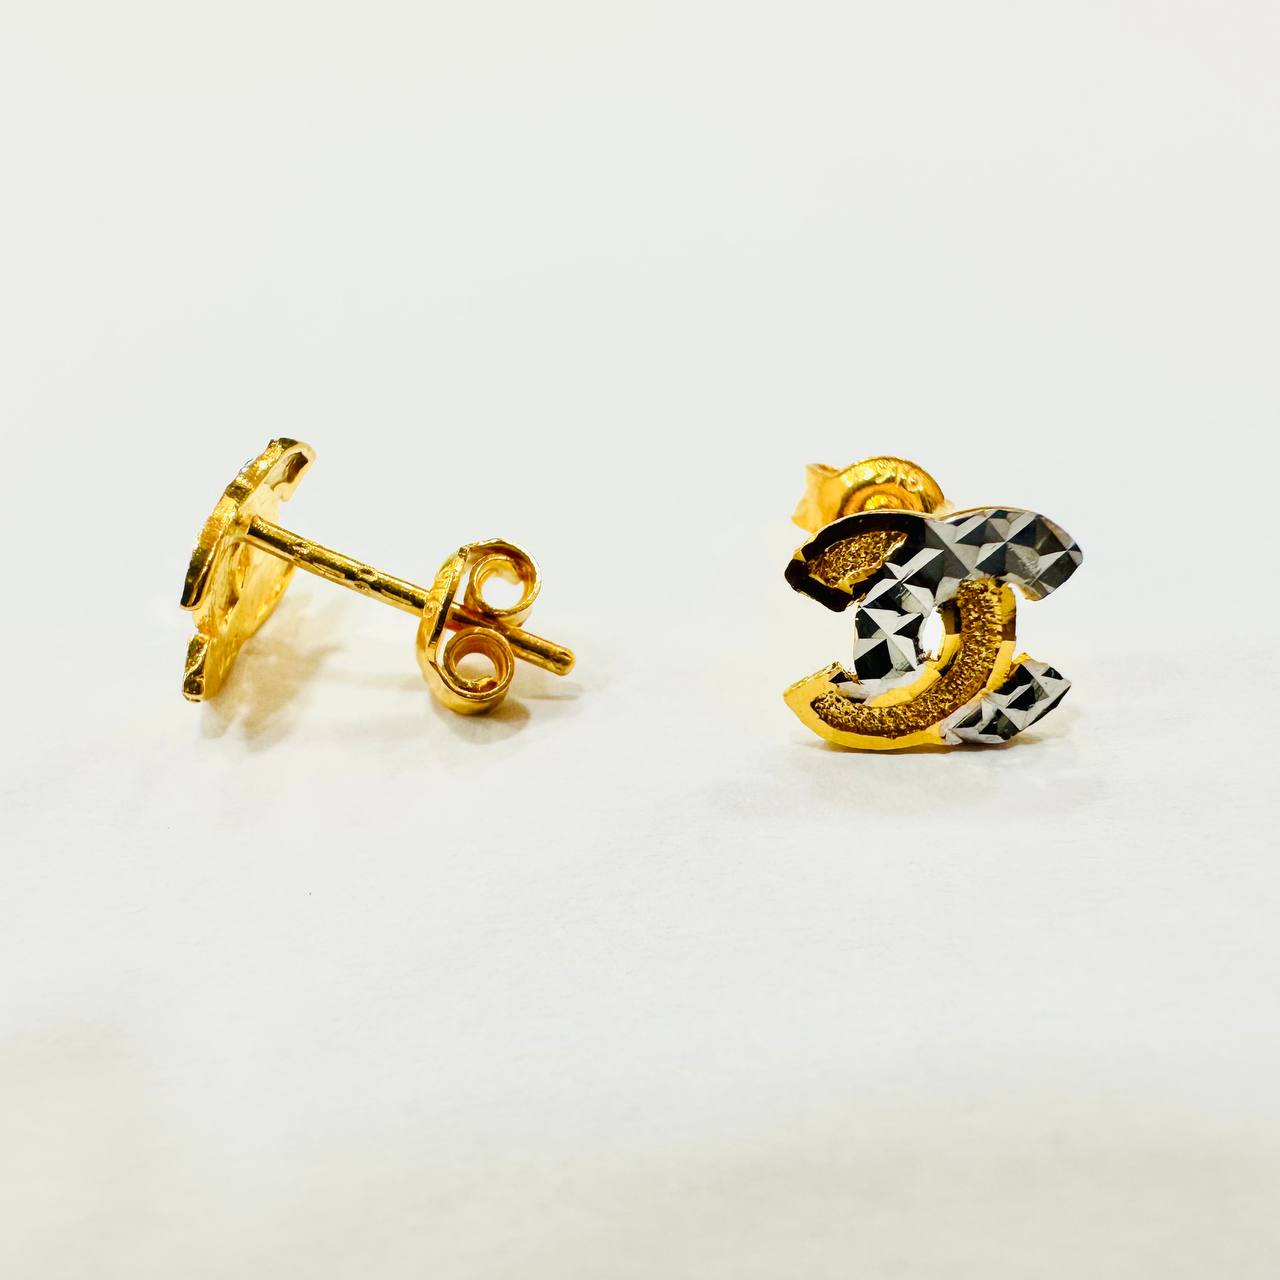 22k / 916 Gold special CC design earring-916 gold-Best Gold Shop